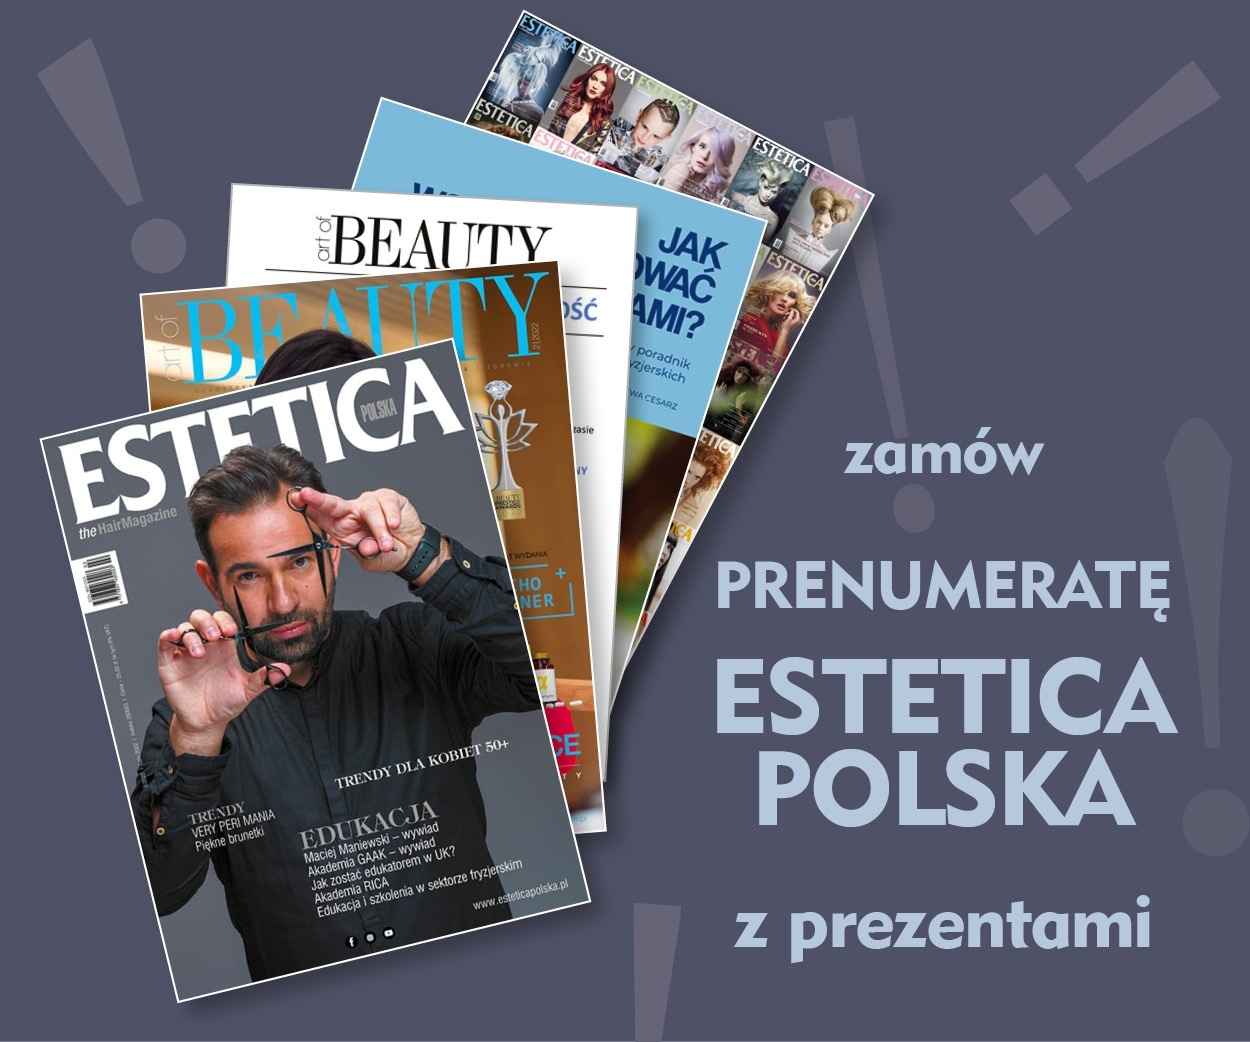 Prenumerata Estetica Polska w sklepie art of BEAUTY